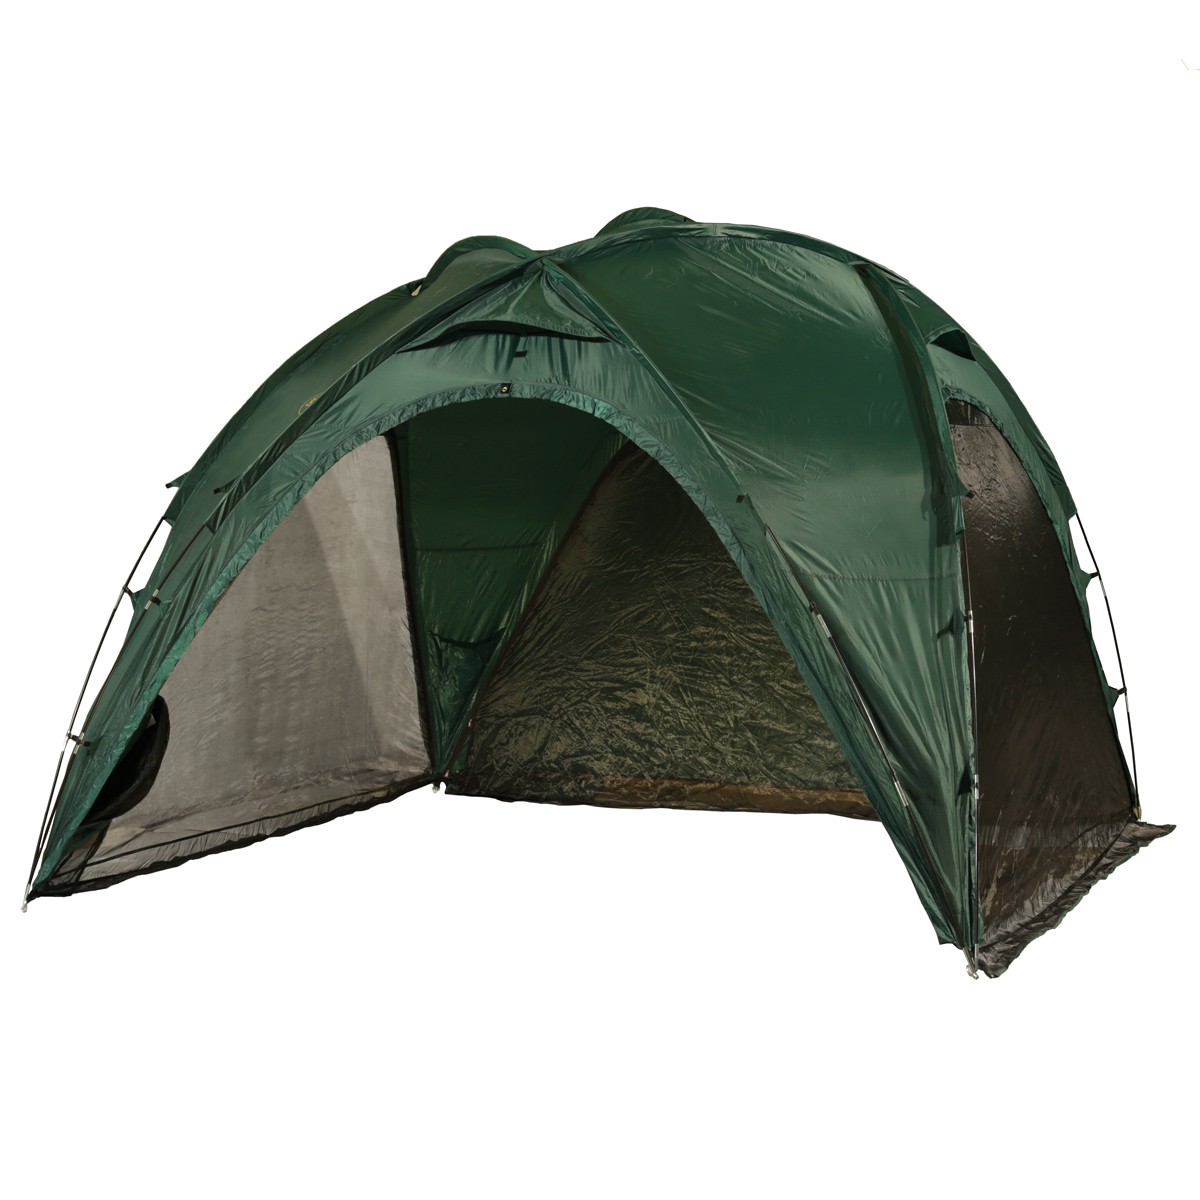 Camping space. Тент-шатер Trek Planet Siesta Tent (70290). Тент-шатер Canadian Camper. Тент Canadian Camper Space. Шатер Канадиан кемпер.